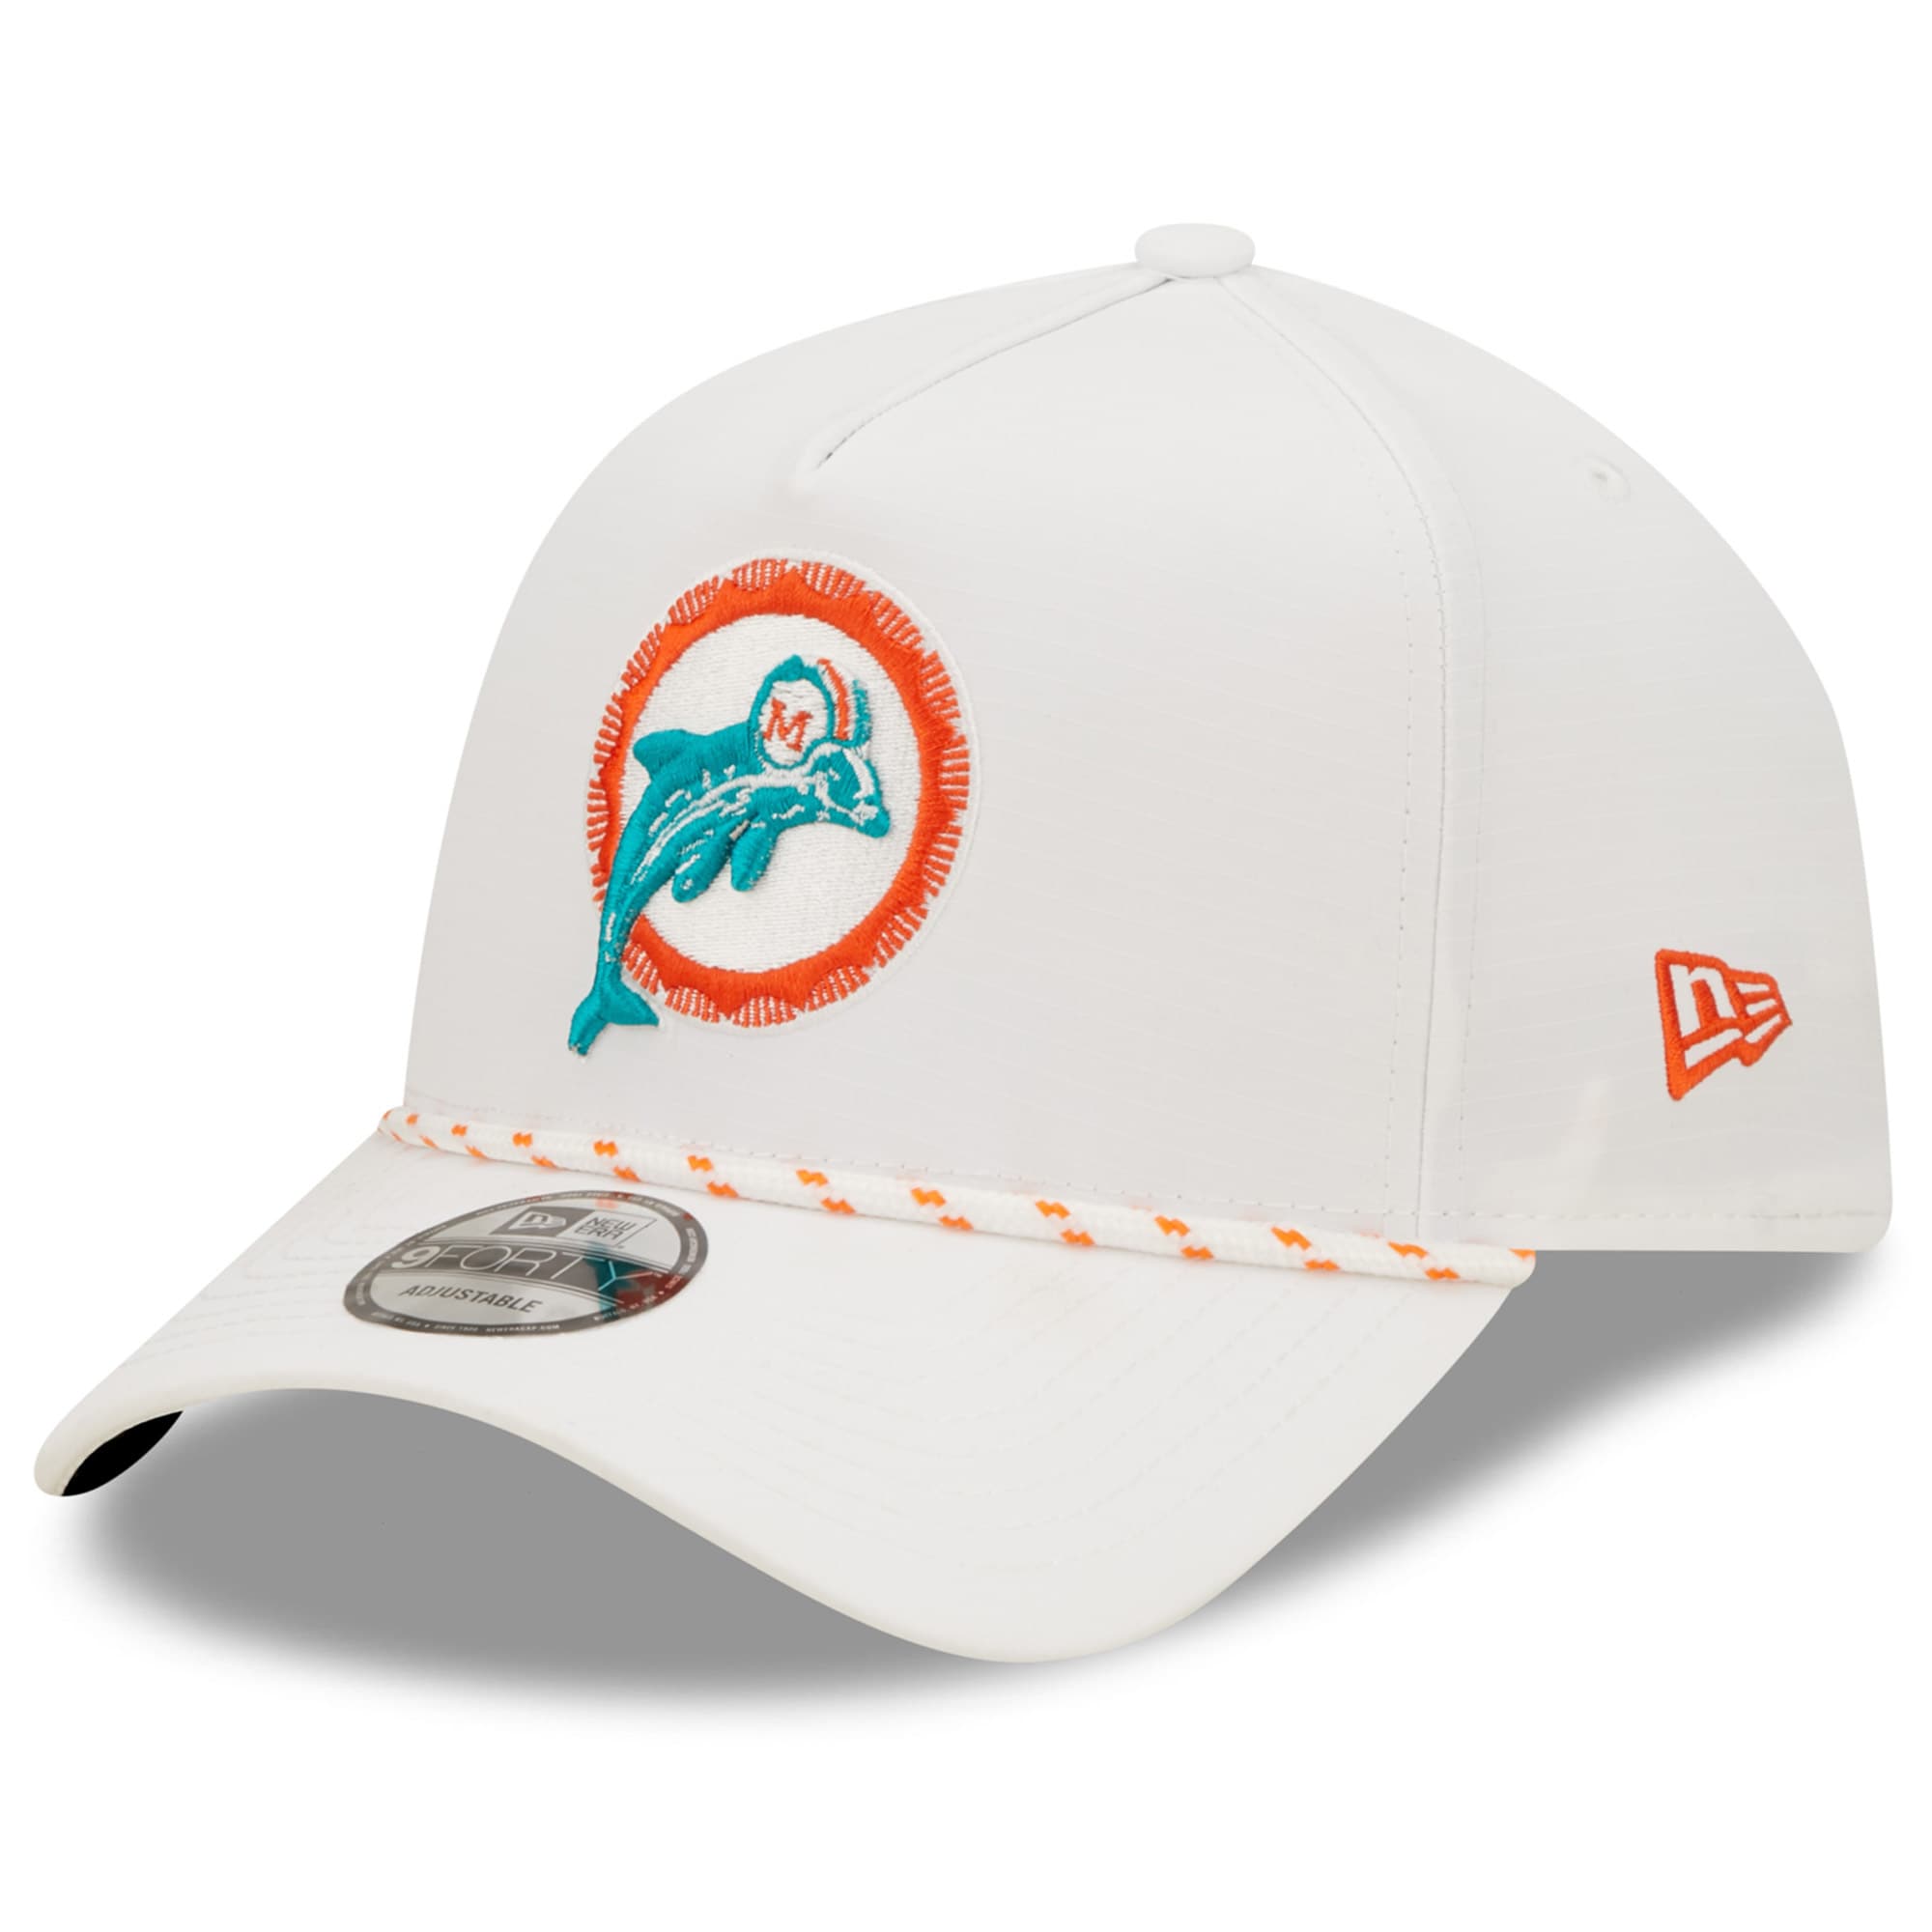 orange miami dolphins hat